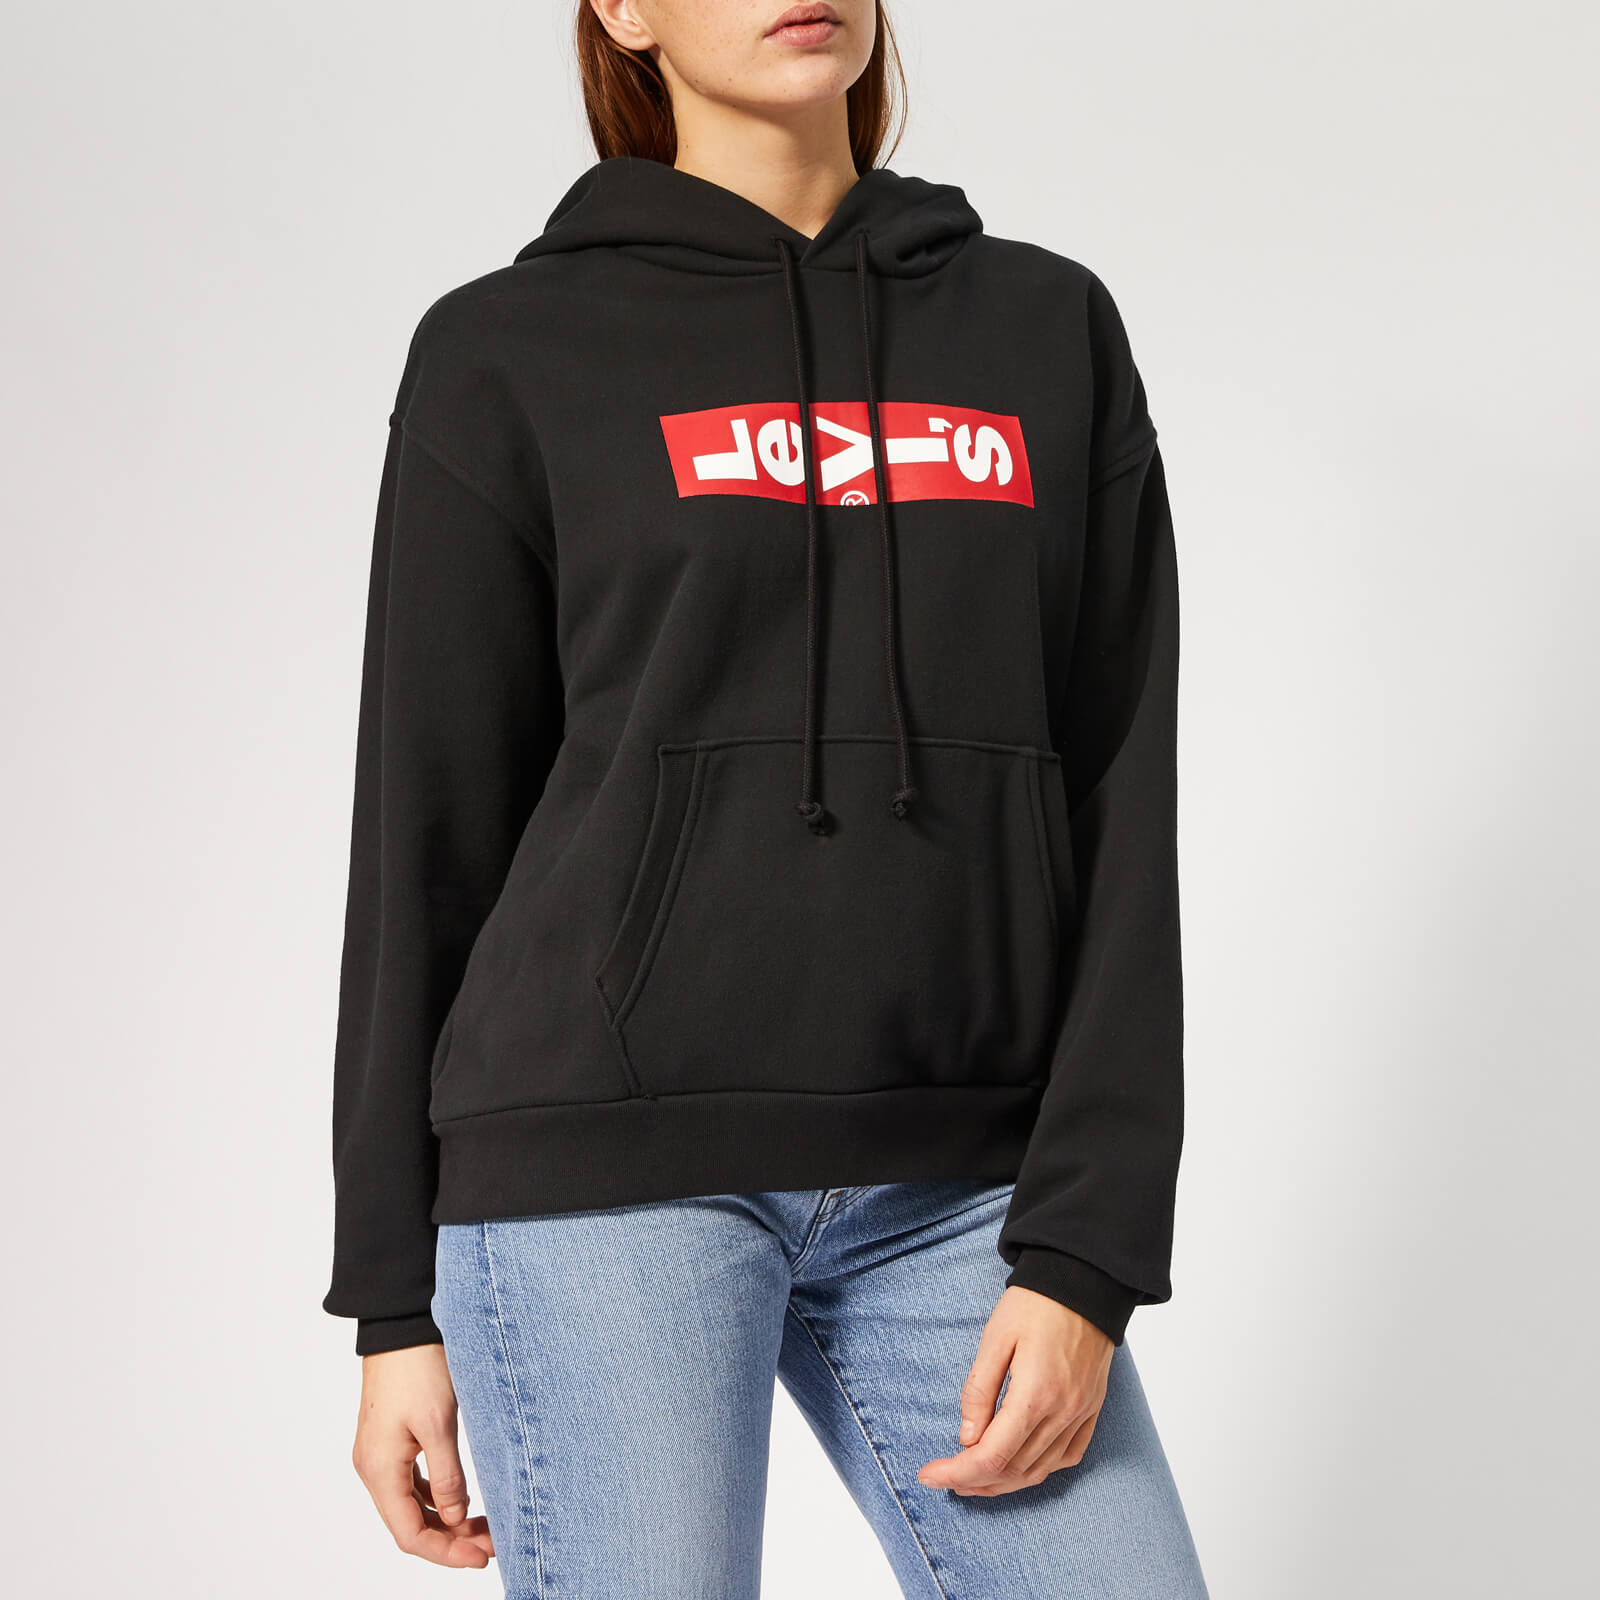 levis hoodie women's sale